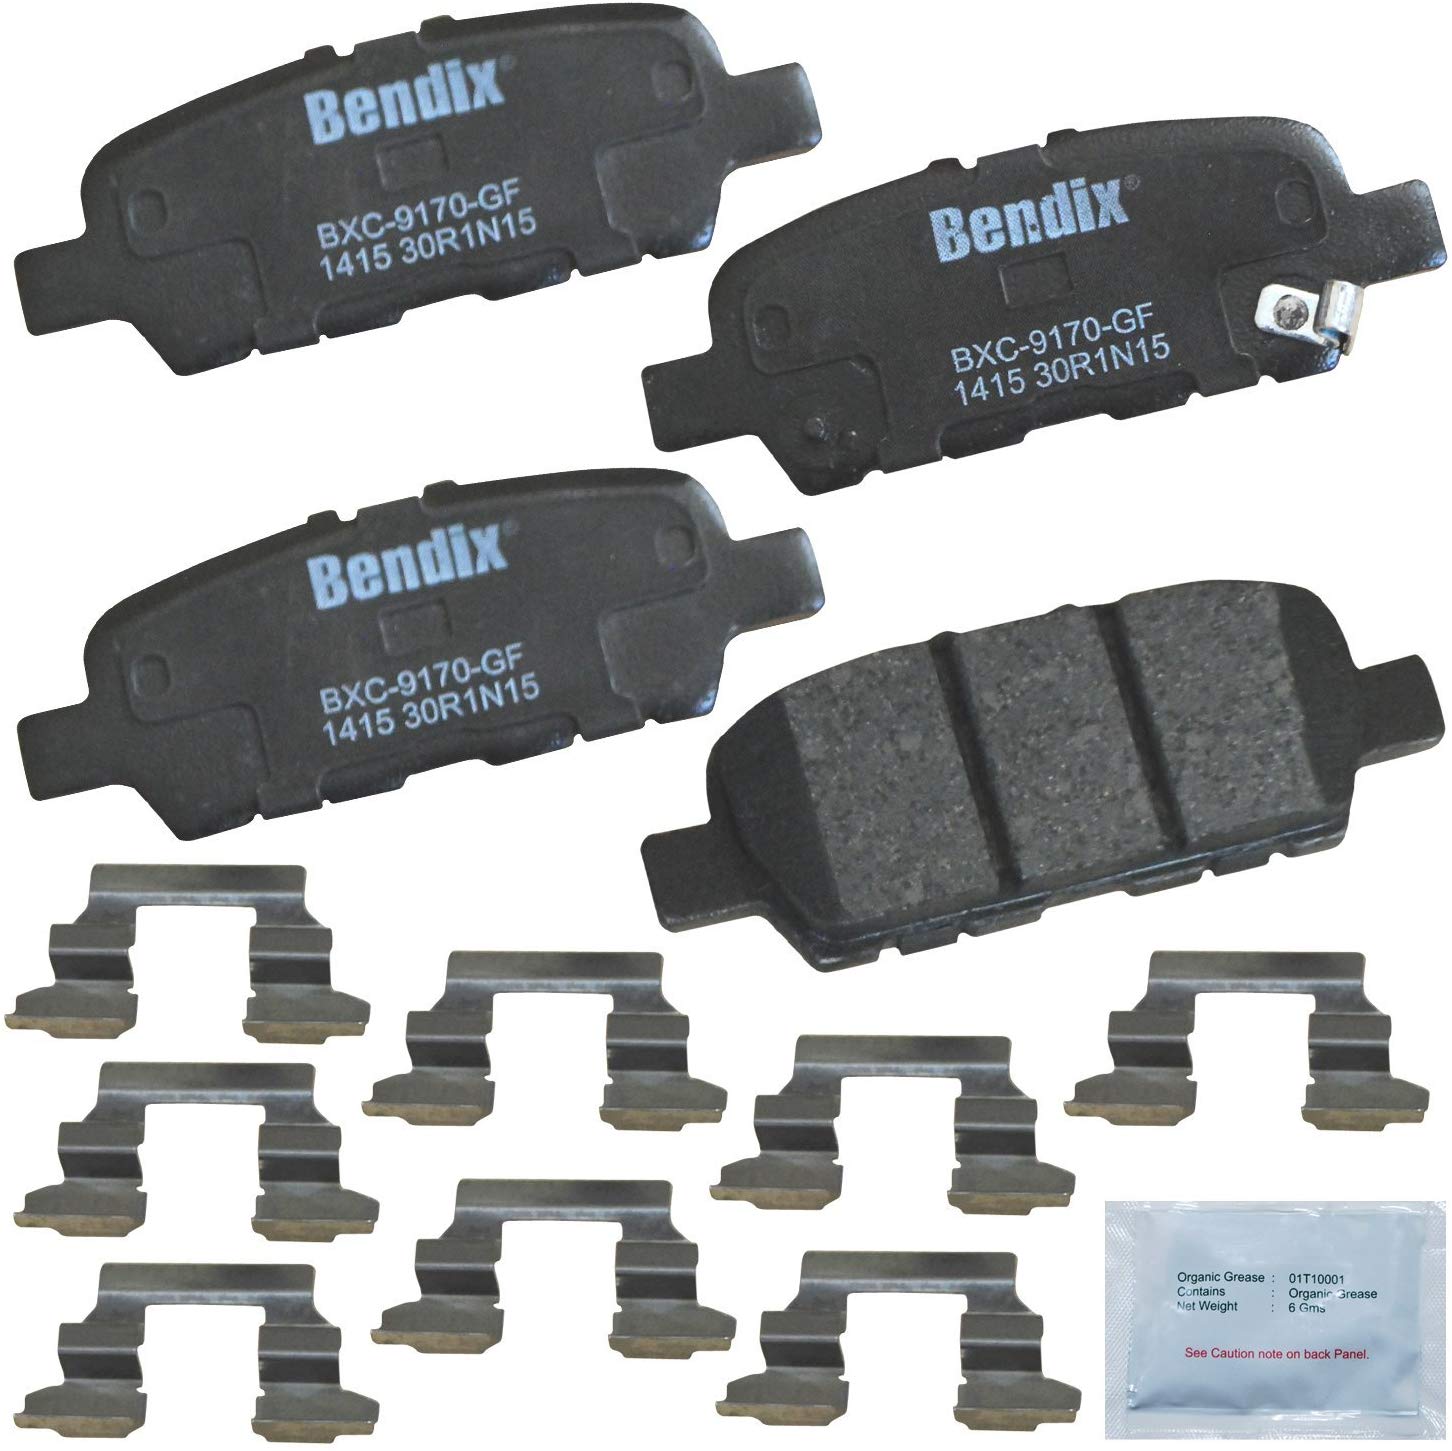 Bendix Premium Copper Free CFC1415 Premium Copper Free Ceramic Brake Pad (with Installation Hardware Rear)